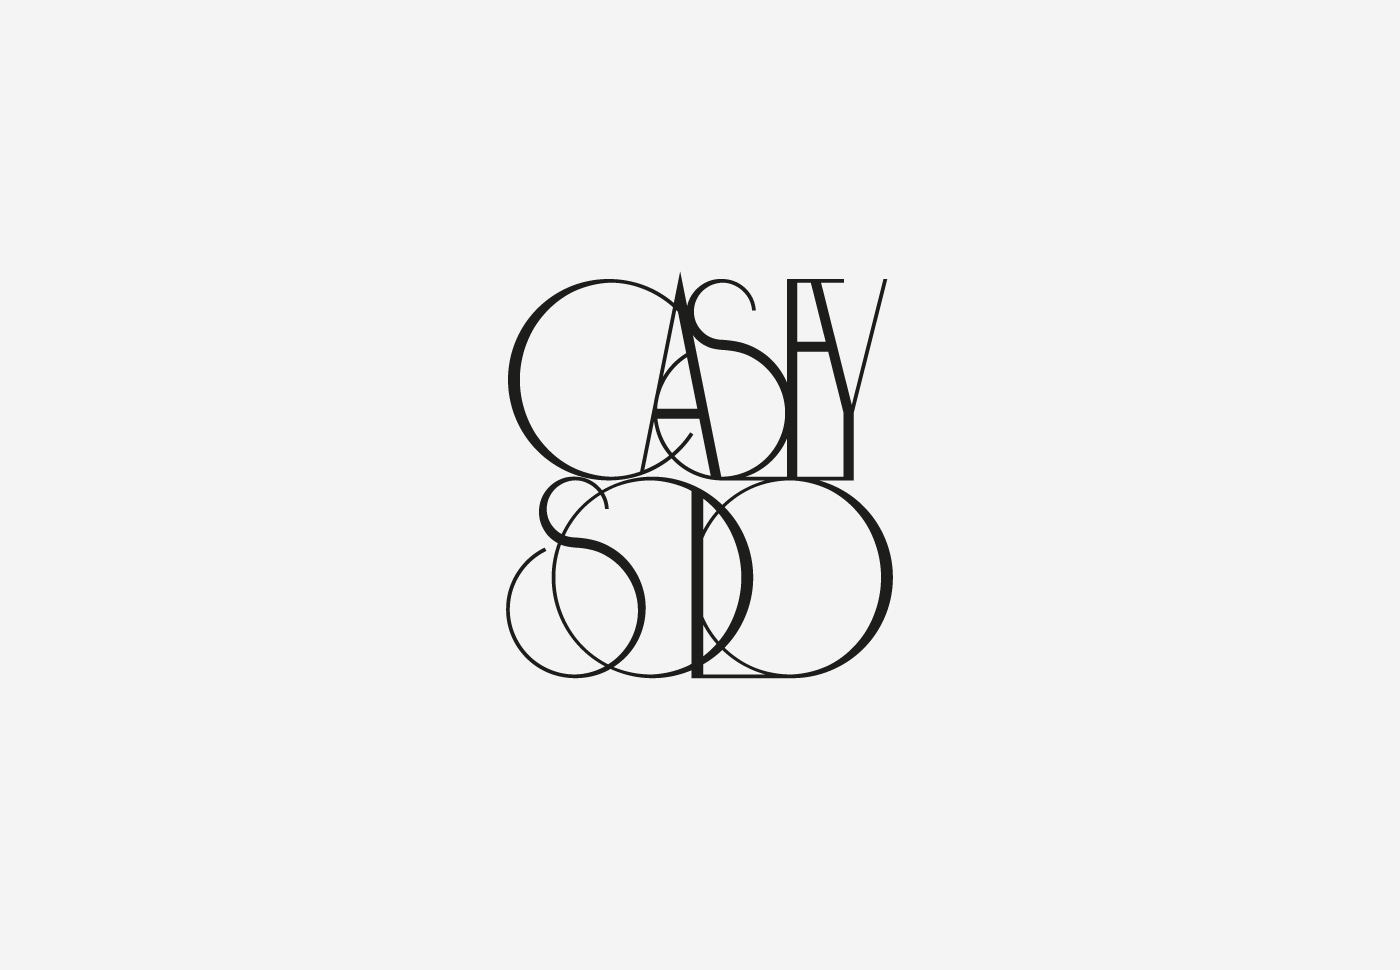 Casey Spooner – Alternative logo title